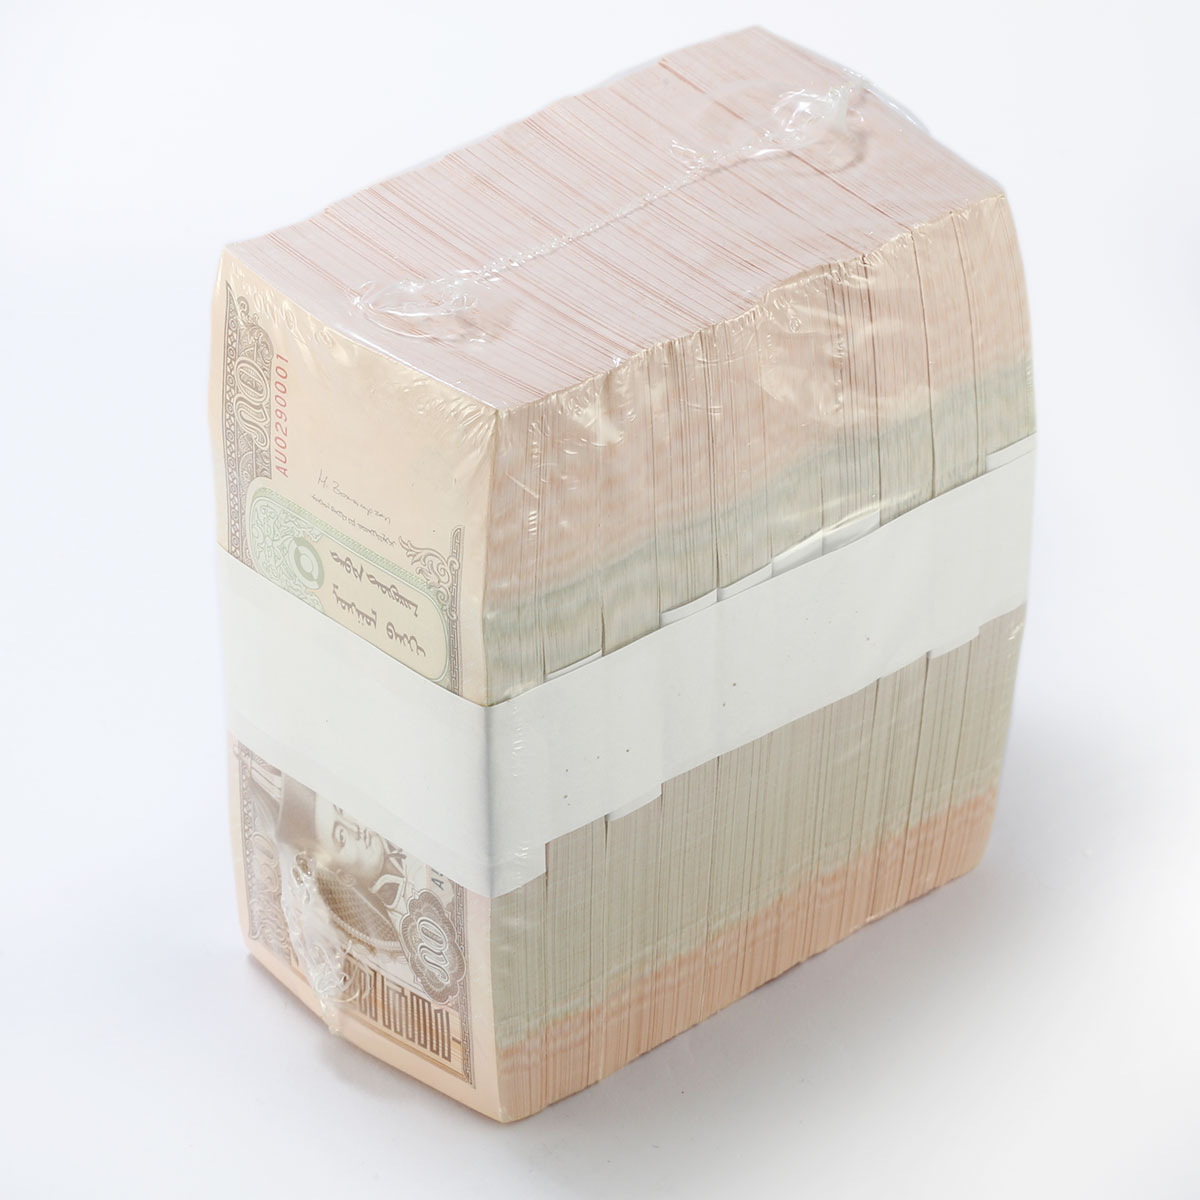 Mongolia 50 togrog 1000 banknotes brick bundle 2016